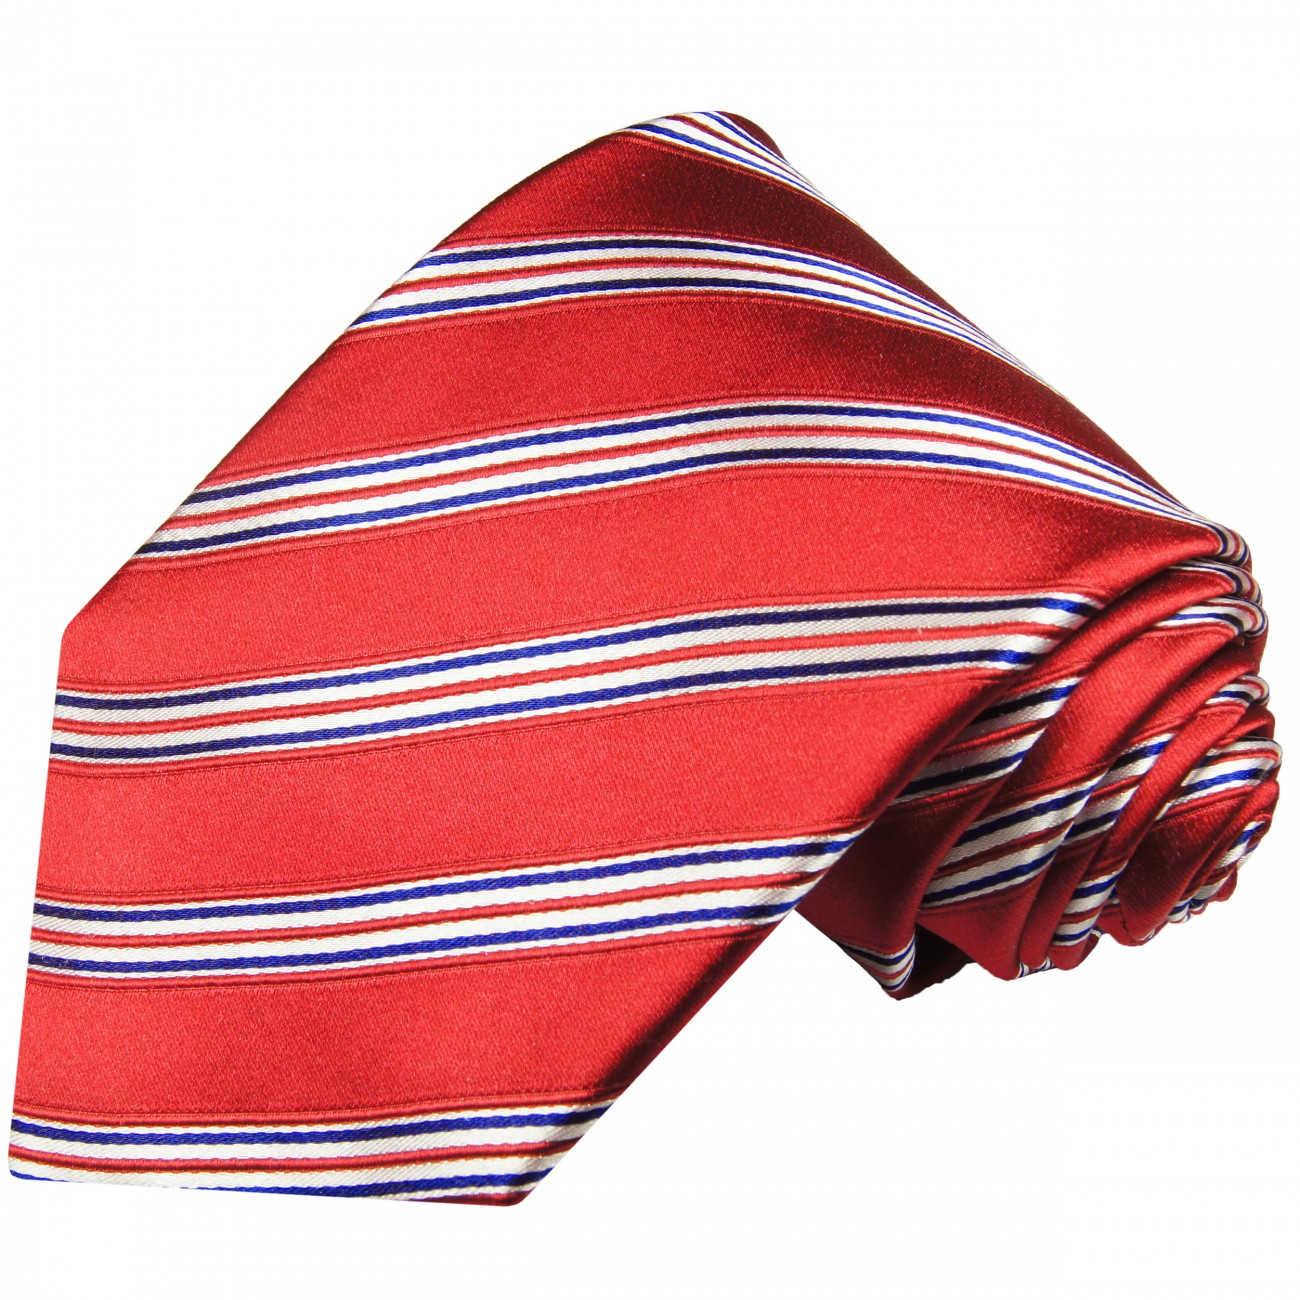 Krawatte rot weiß blau gestreift Seide